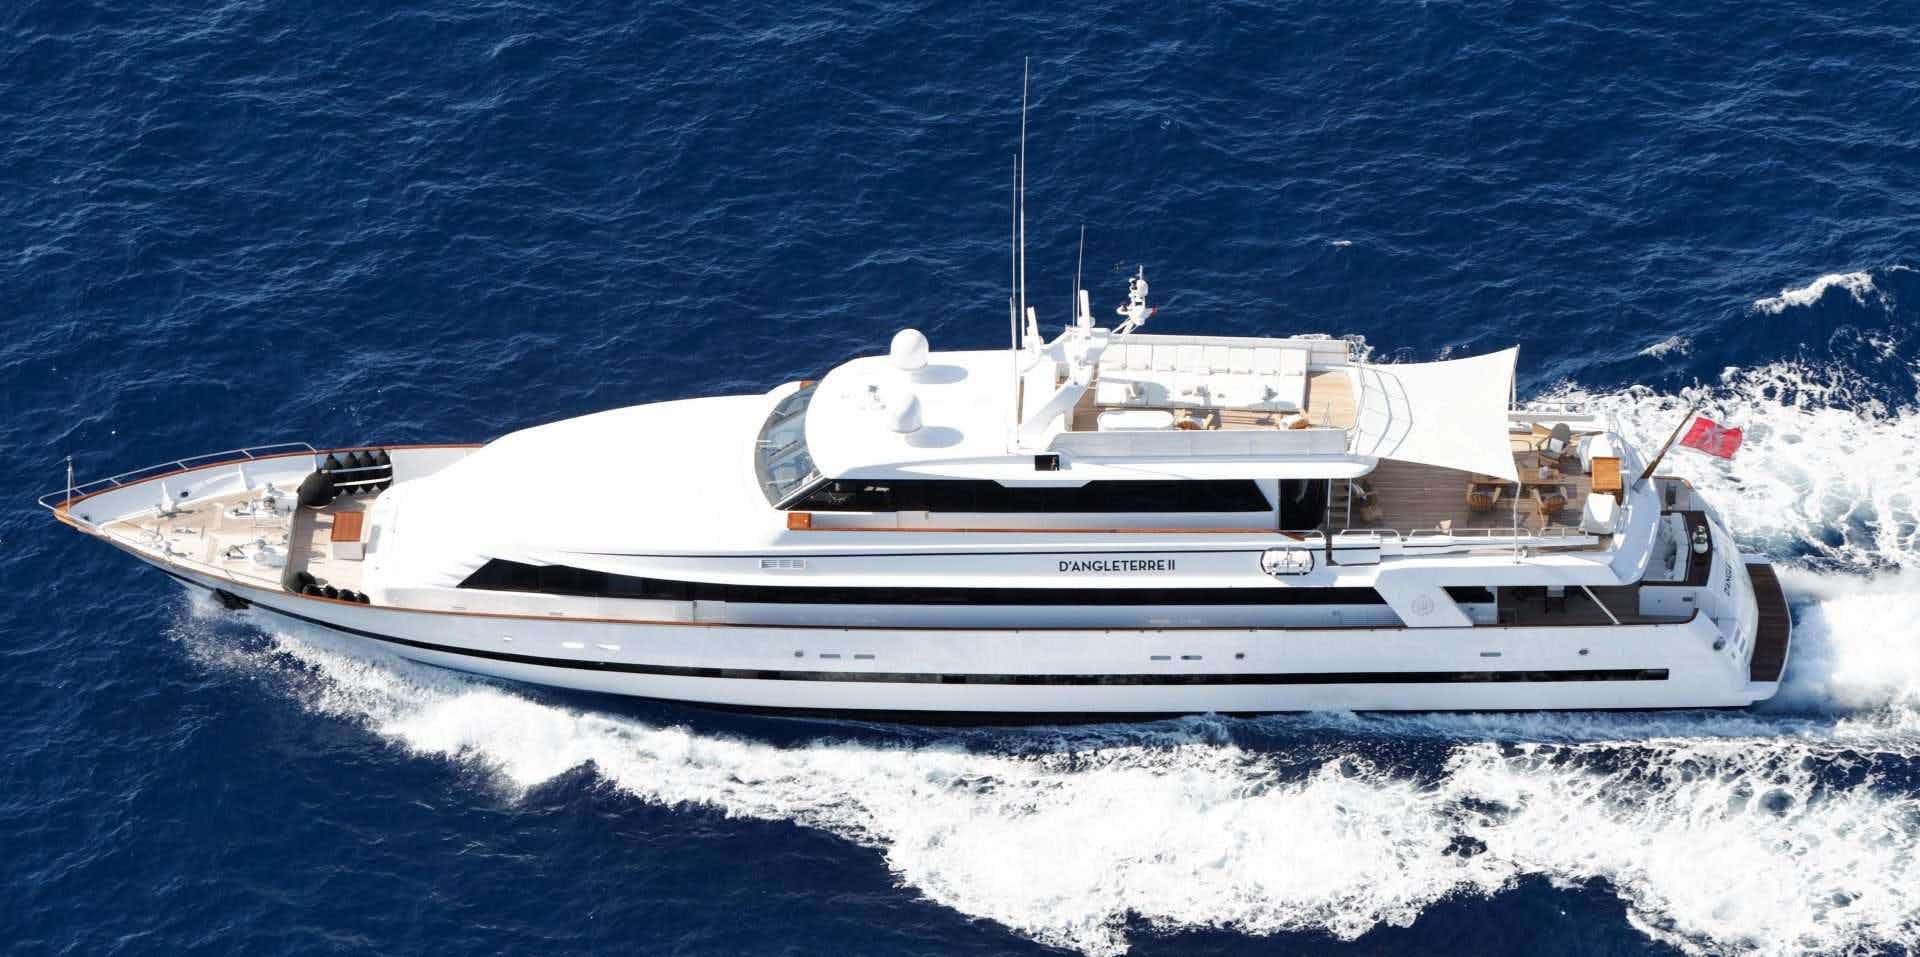 SEA LADY II - Yacht Charter Slovenia & Boat hire in W. Med -Naples/Sicily, W. Med -Riviera/Cors/Sard., W. Med - Spain/Balearics 1